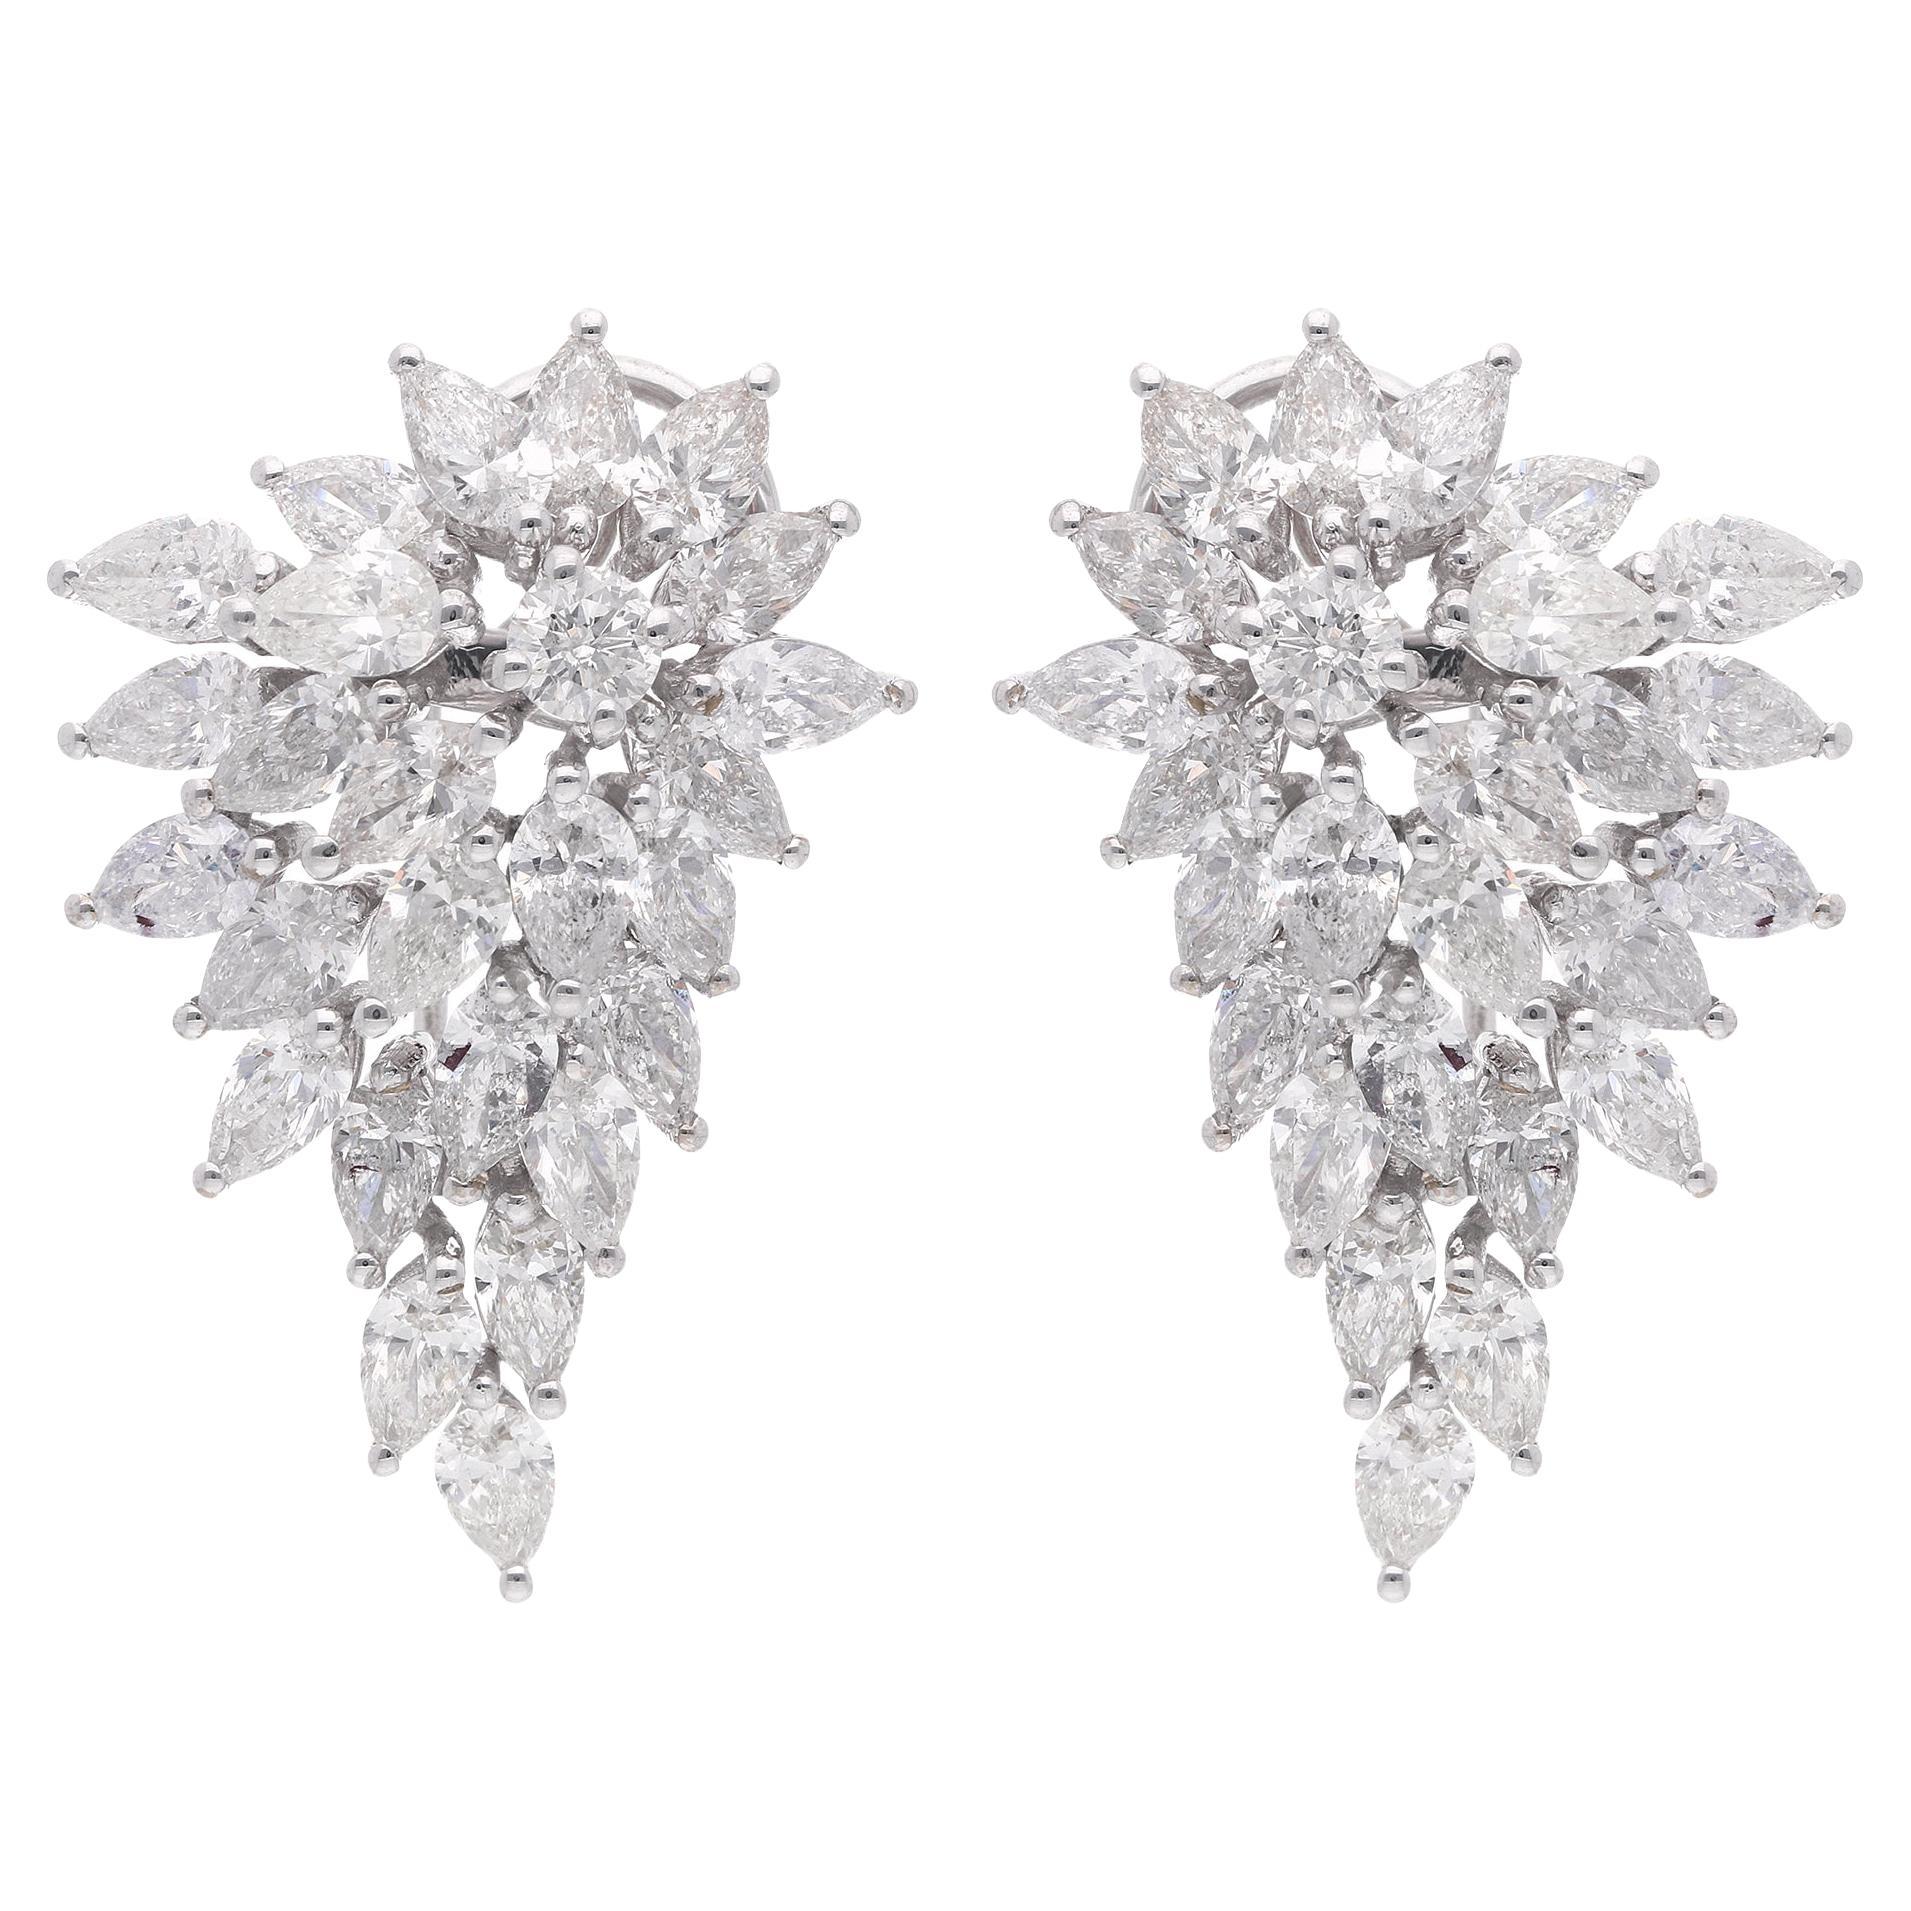 8.71 Carat SI Clarity HI Color Pear Diamond Earrings 18 Karat White Gold Jewelry